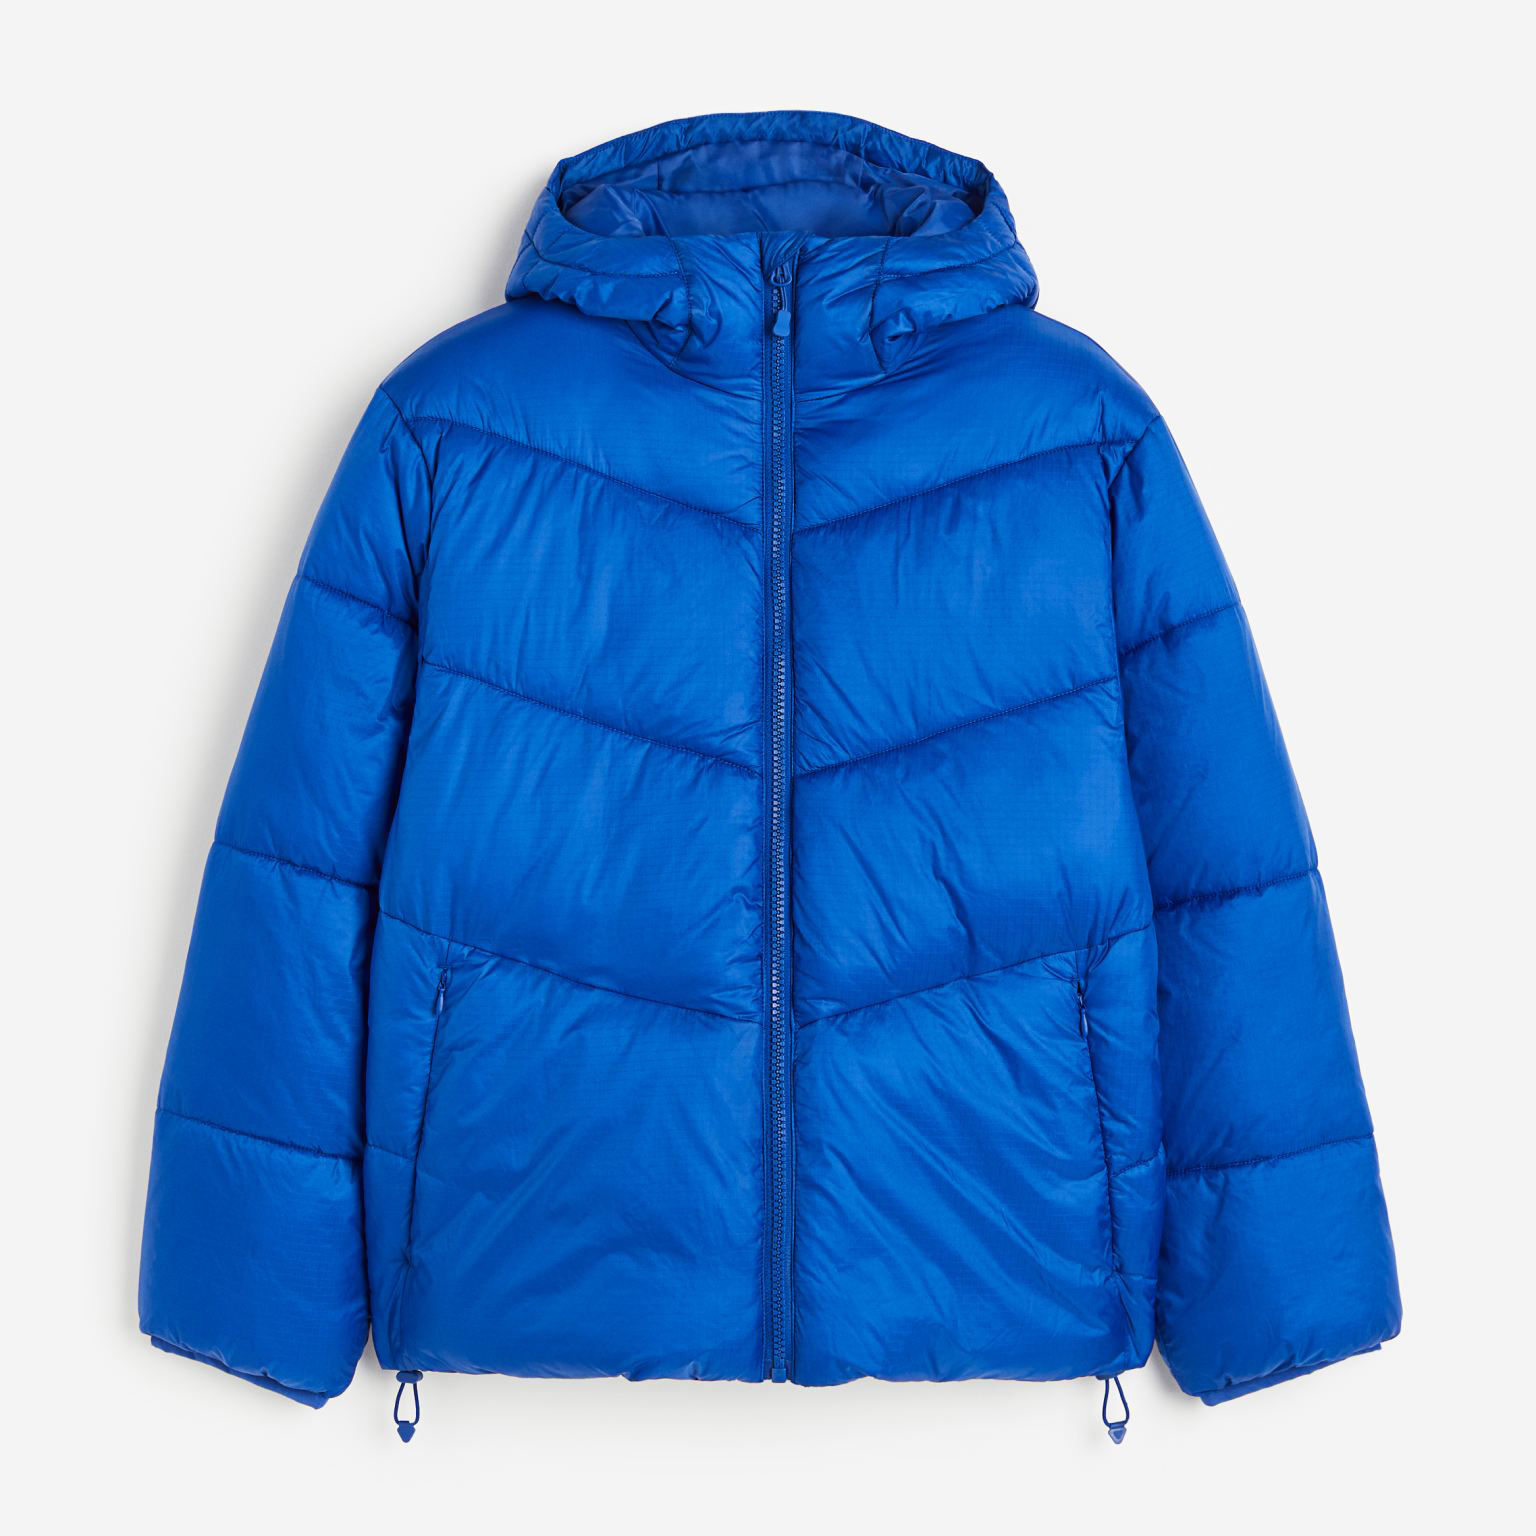 Куртка-пуховик H&M Water-repellent, ярко-синий куртка утепленная свободного кроя